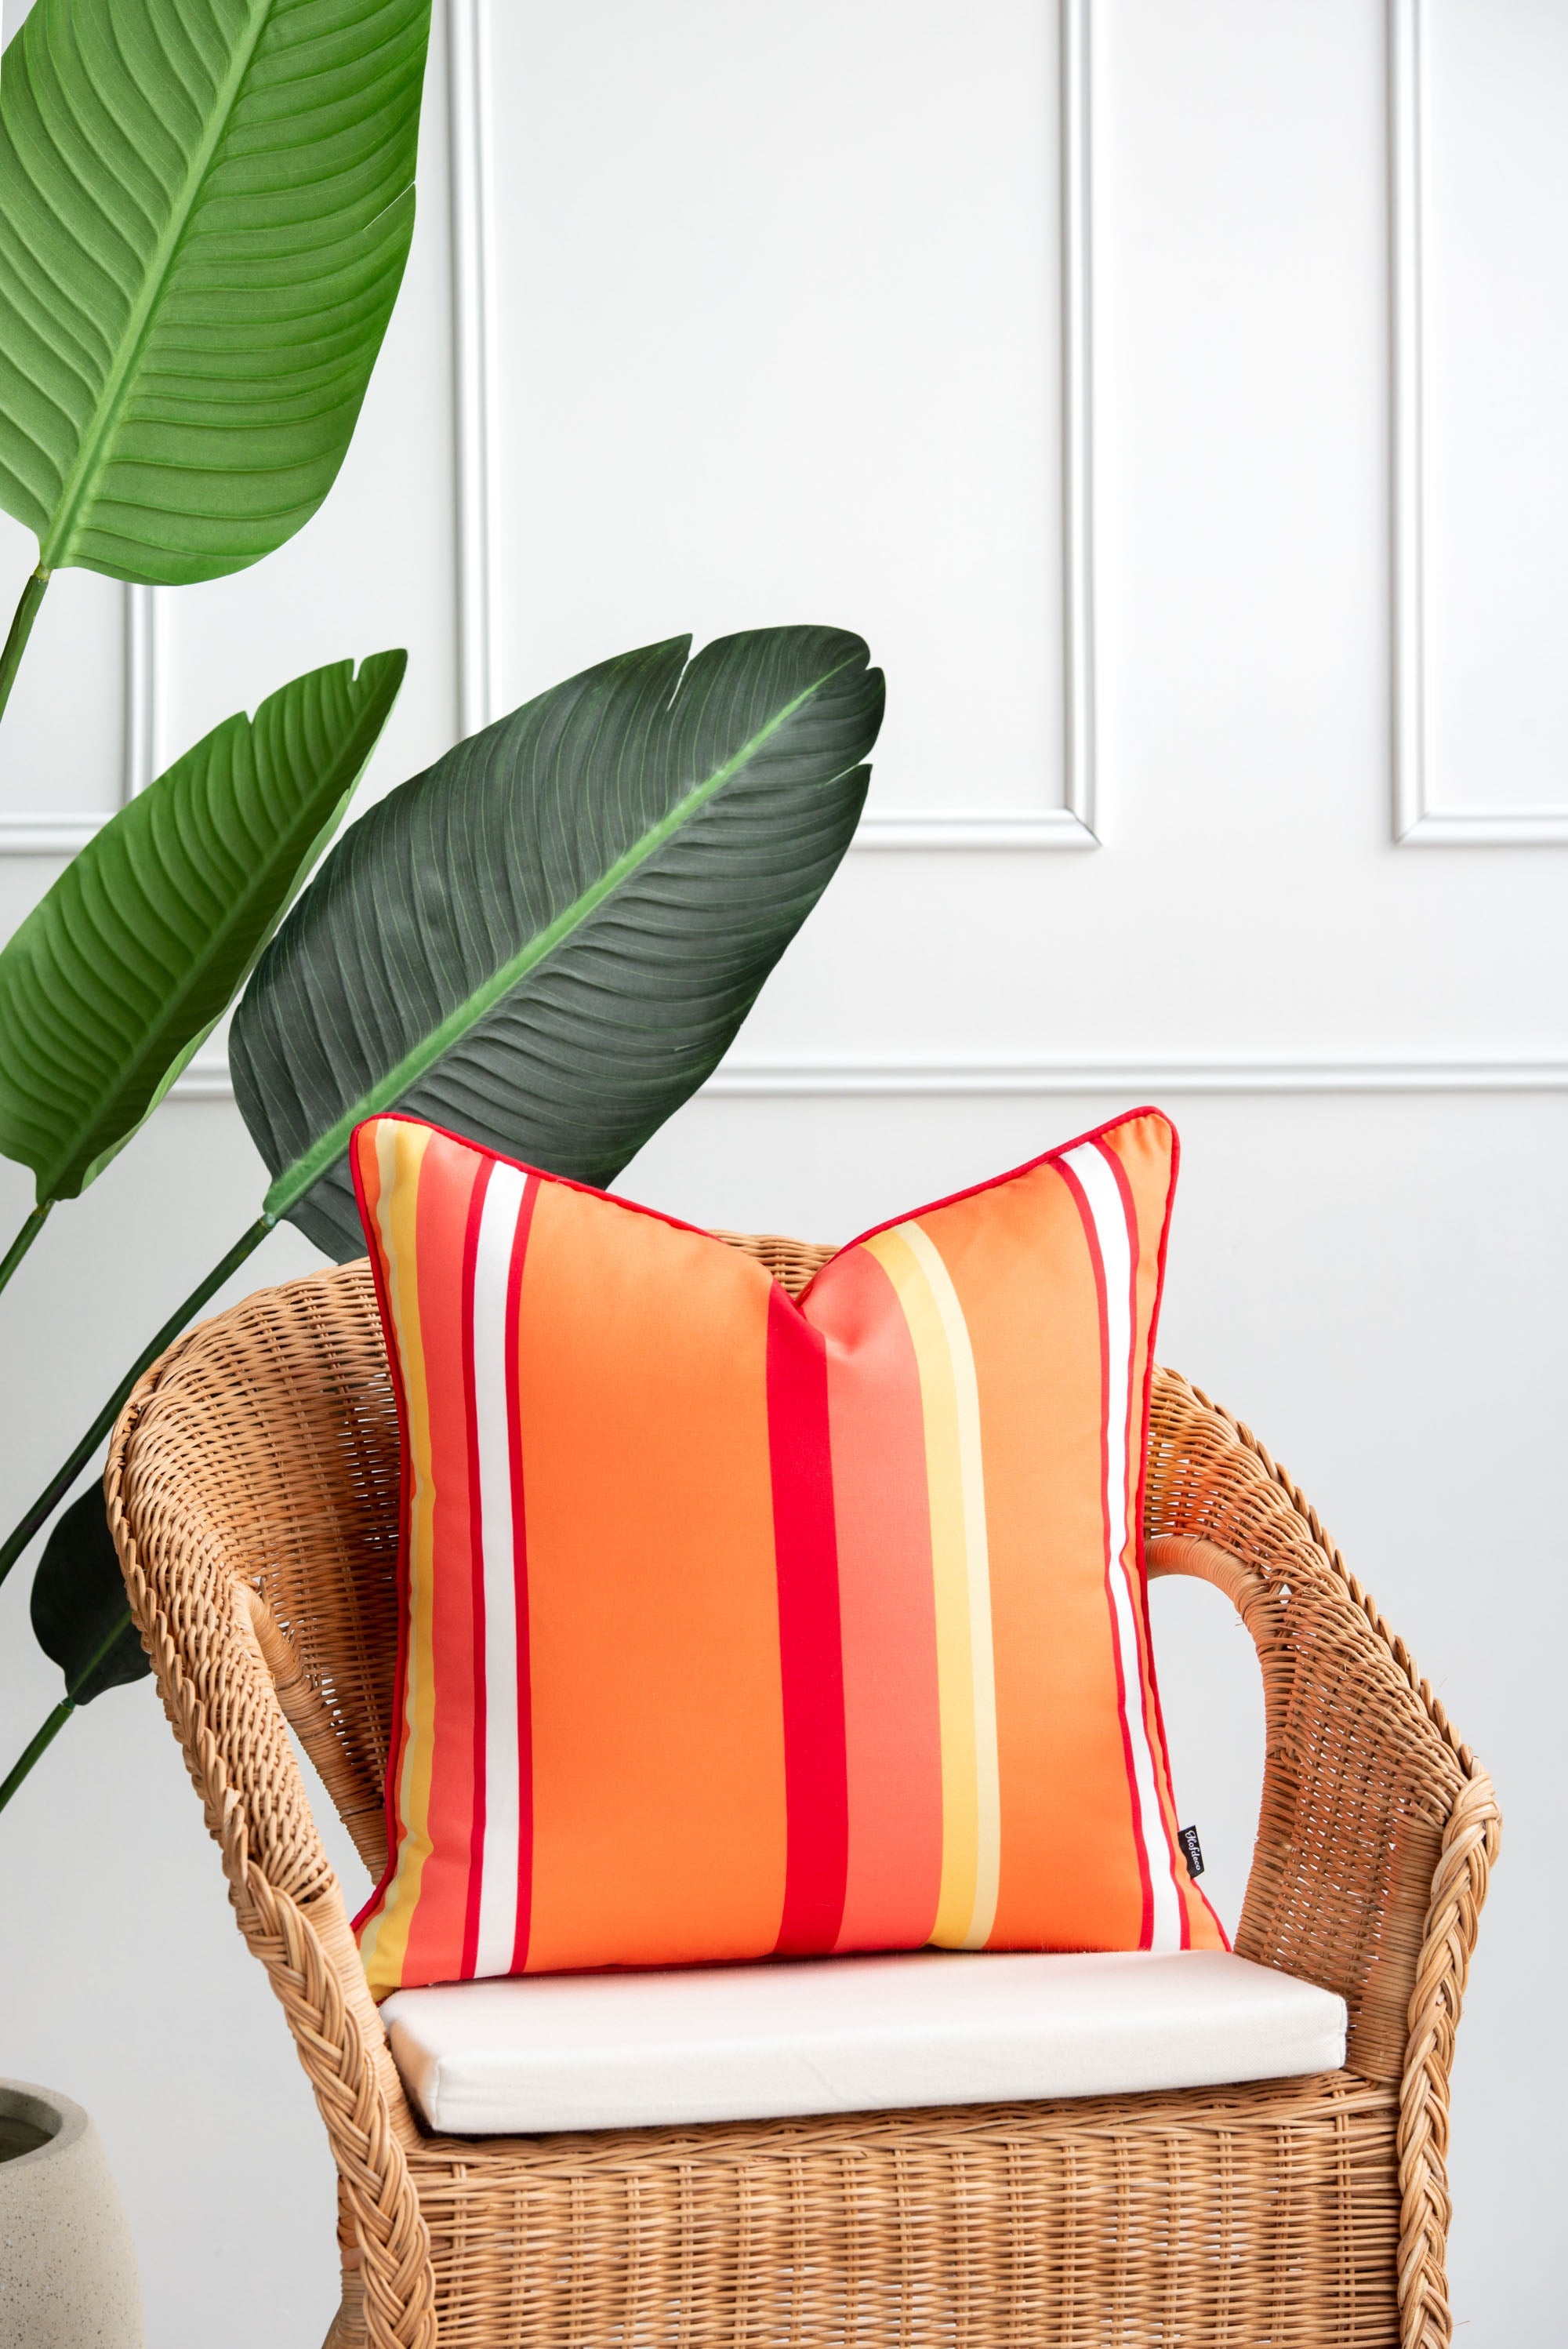 Patio Outdoor Pillow Cover, Rainbow Stripes, Orange, 18"x18"